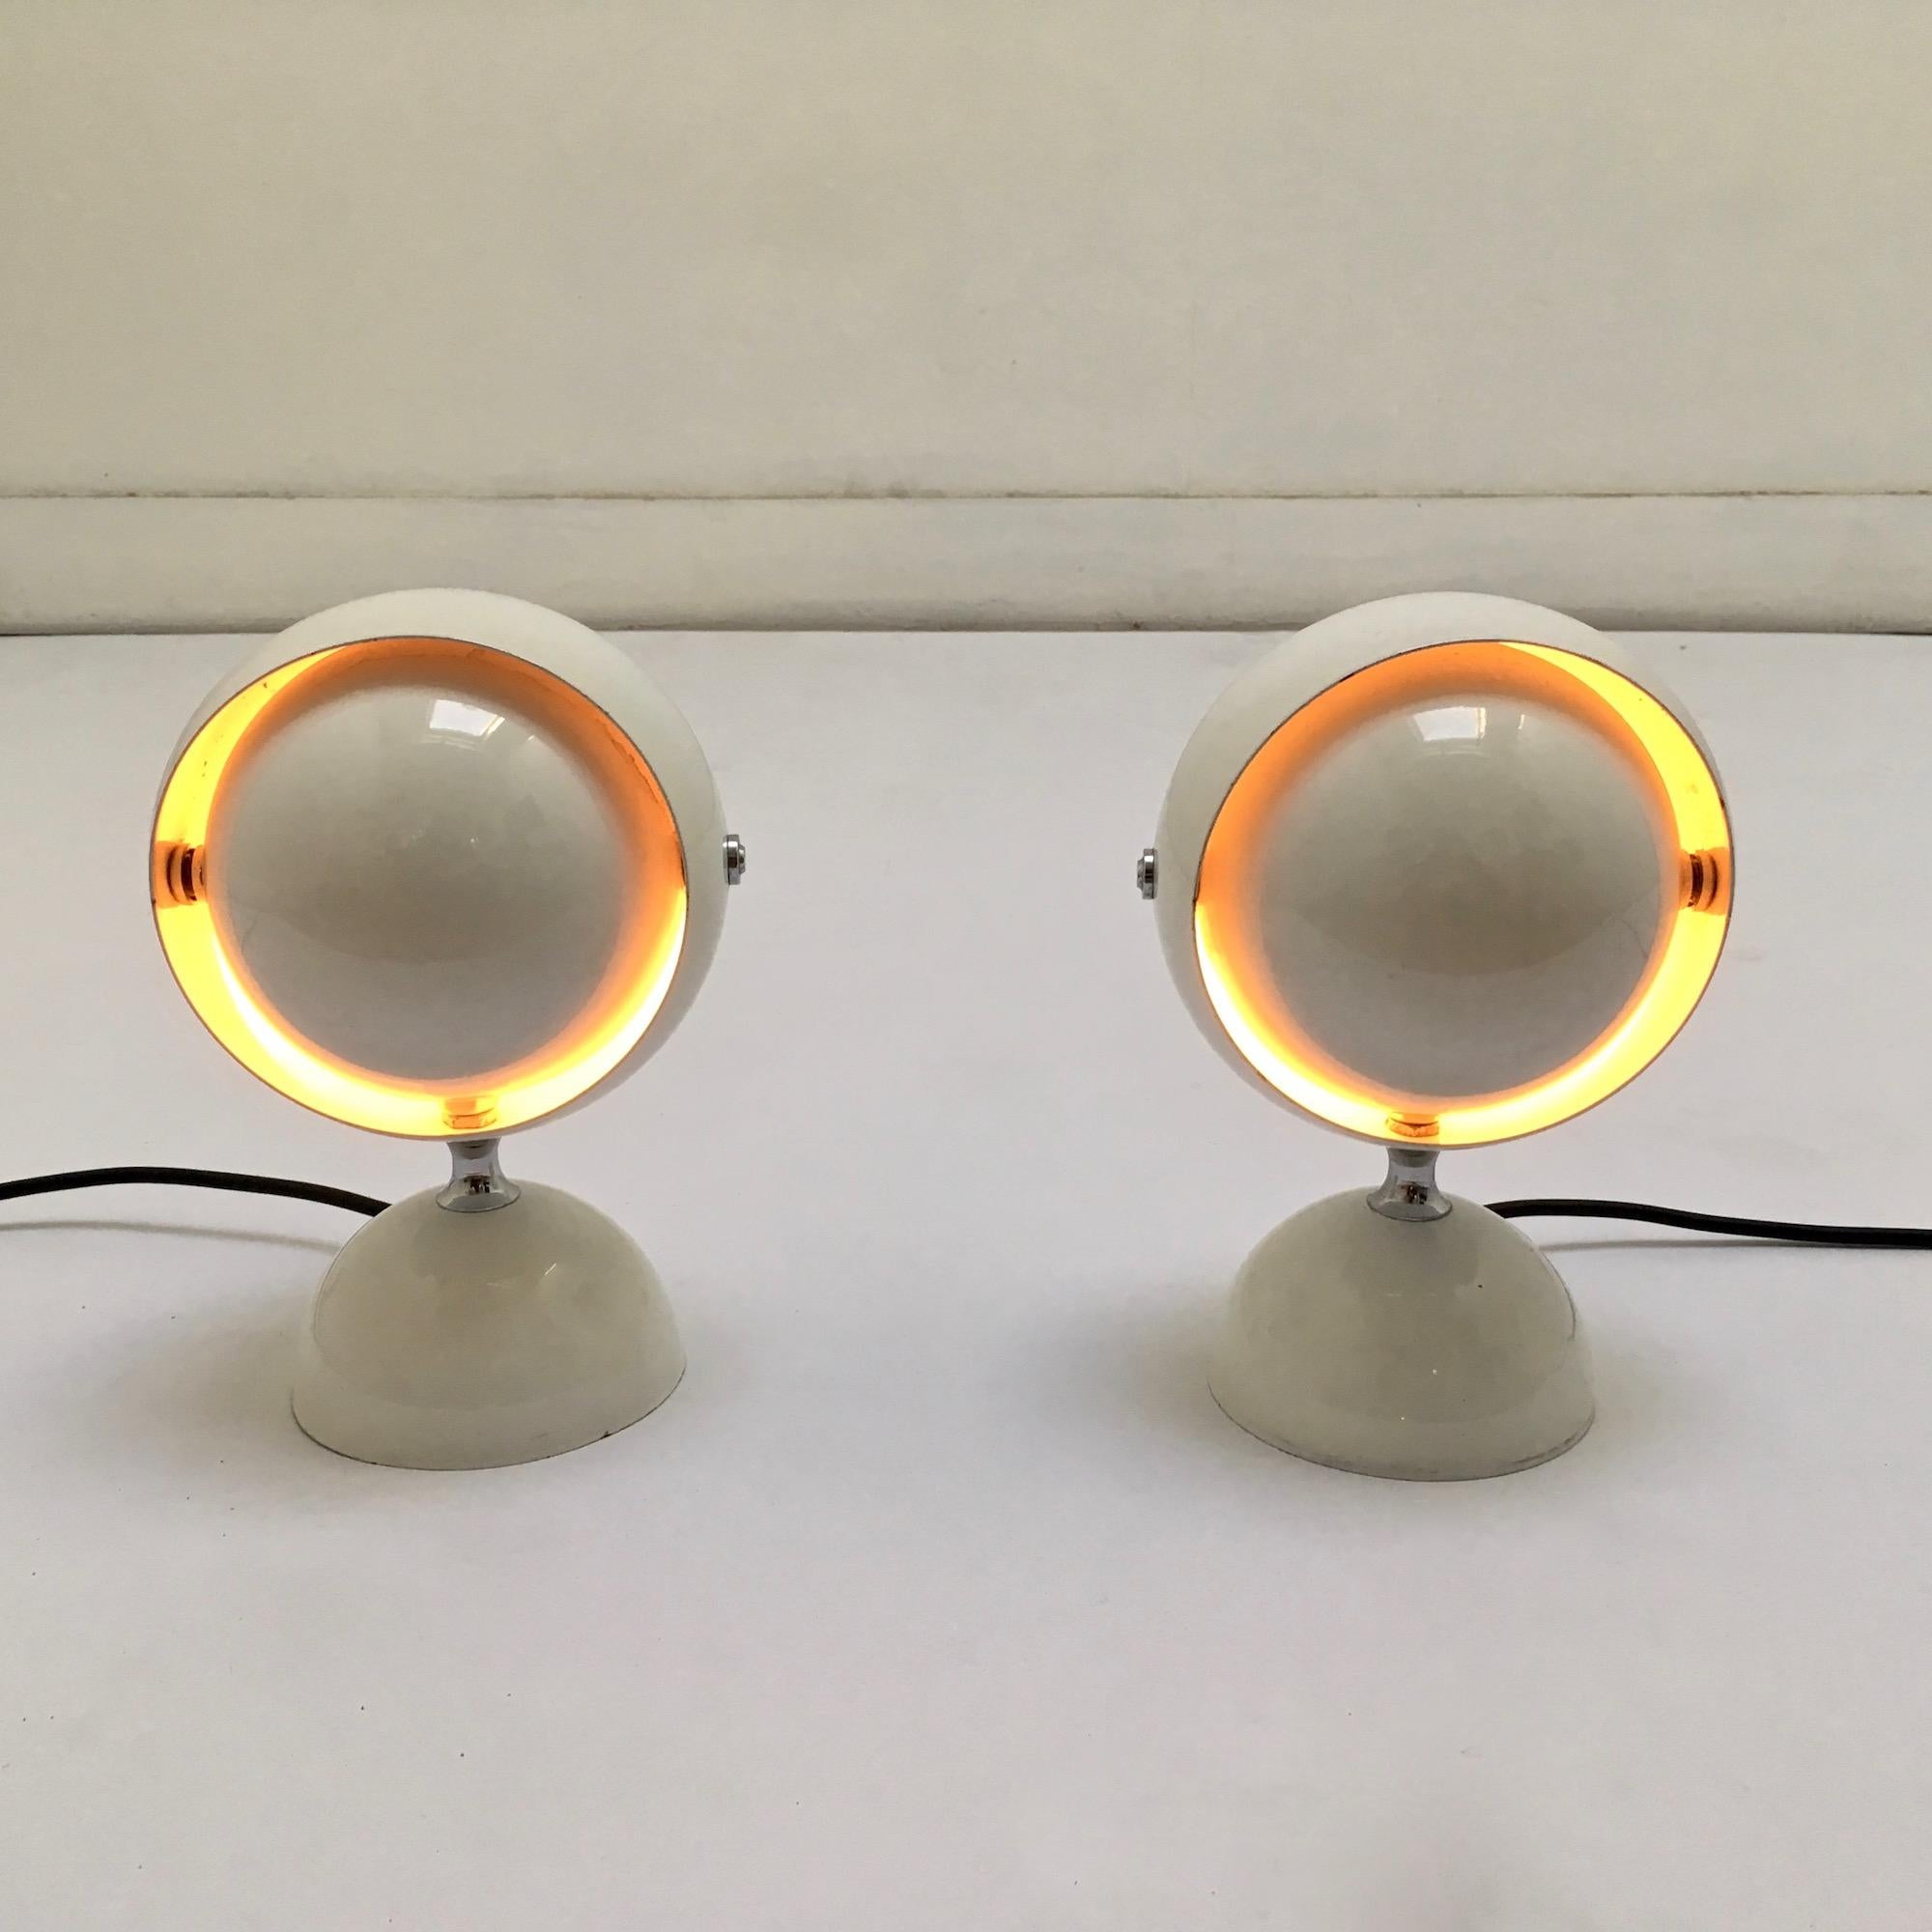 Italian Pair of 1970s Space Age Eye Ball Lamp